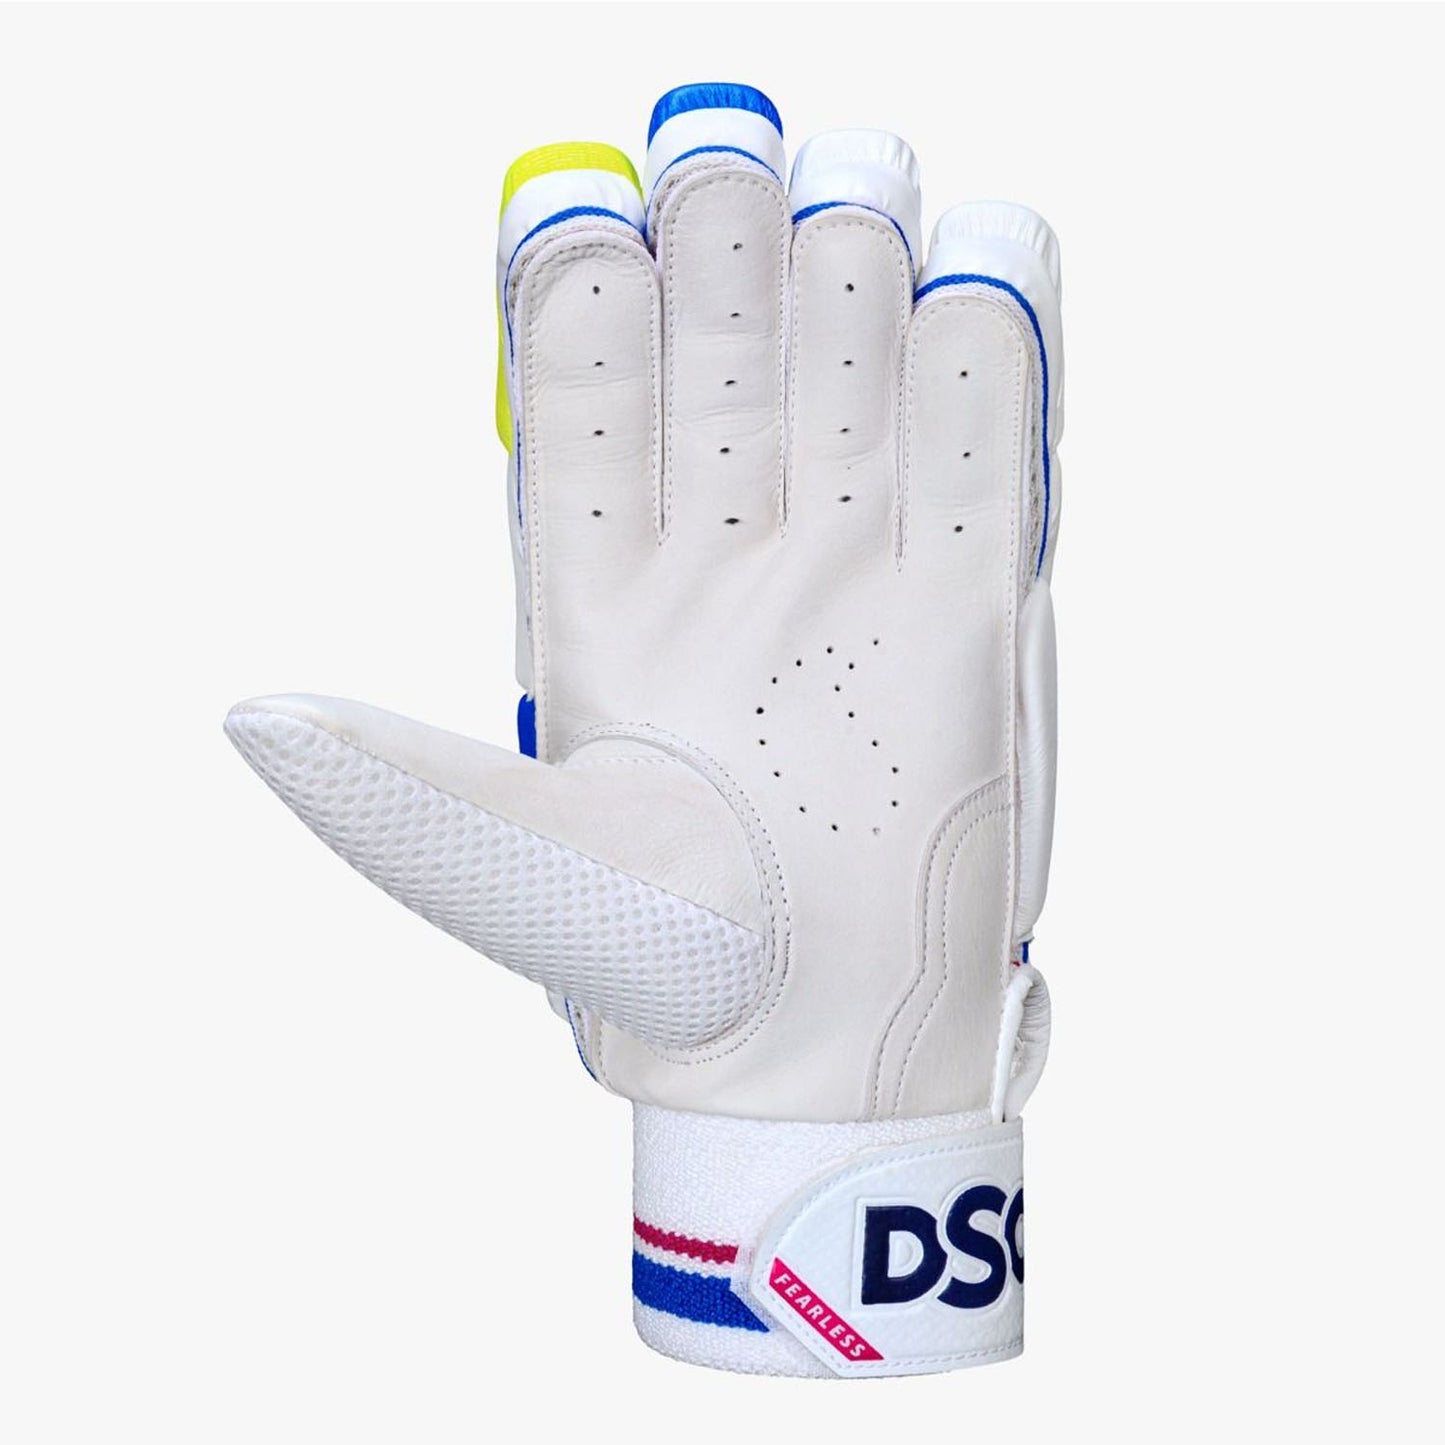 DSC Intense Fury RH Batting Gloves , White/Black/Lime - Best Price online Prokicksports.com